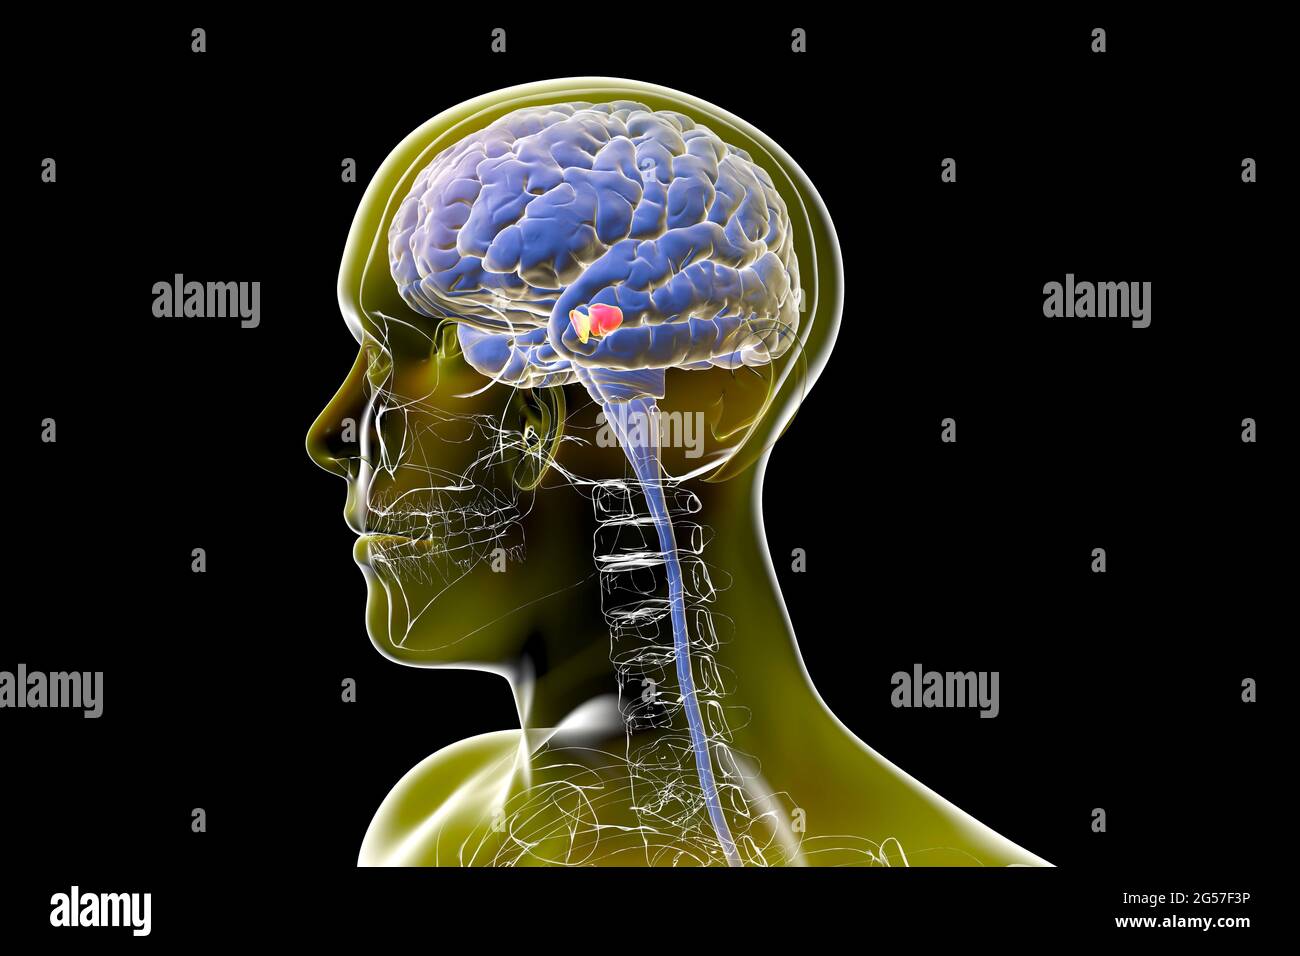 Substantia nigra in the human brain, illustration Stock Photo